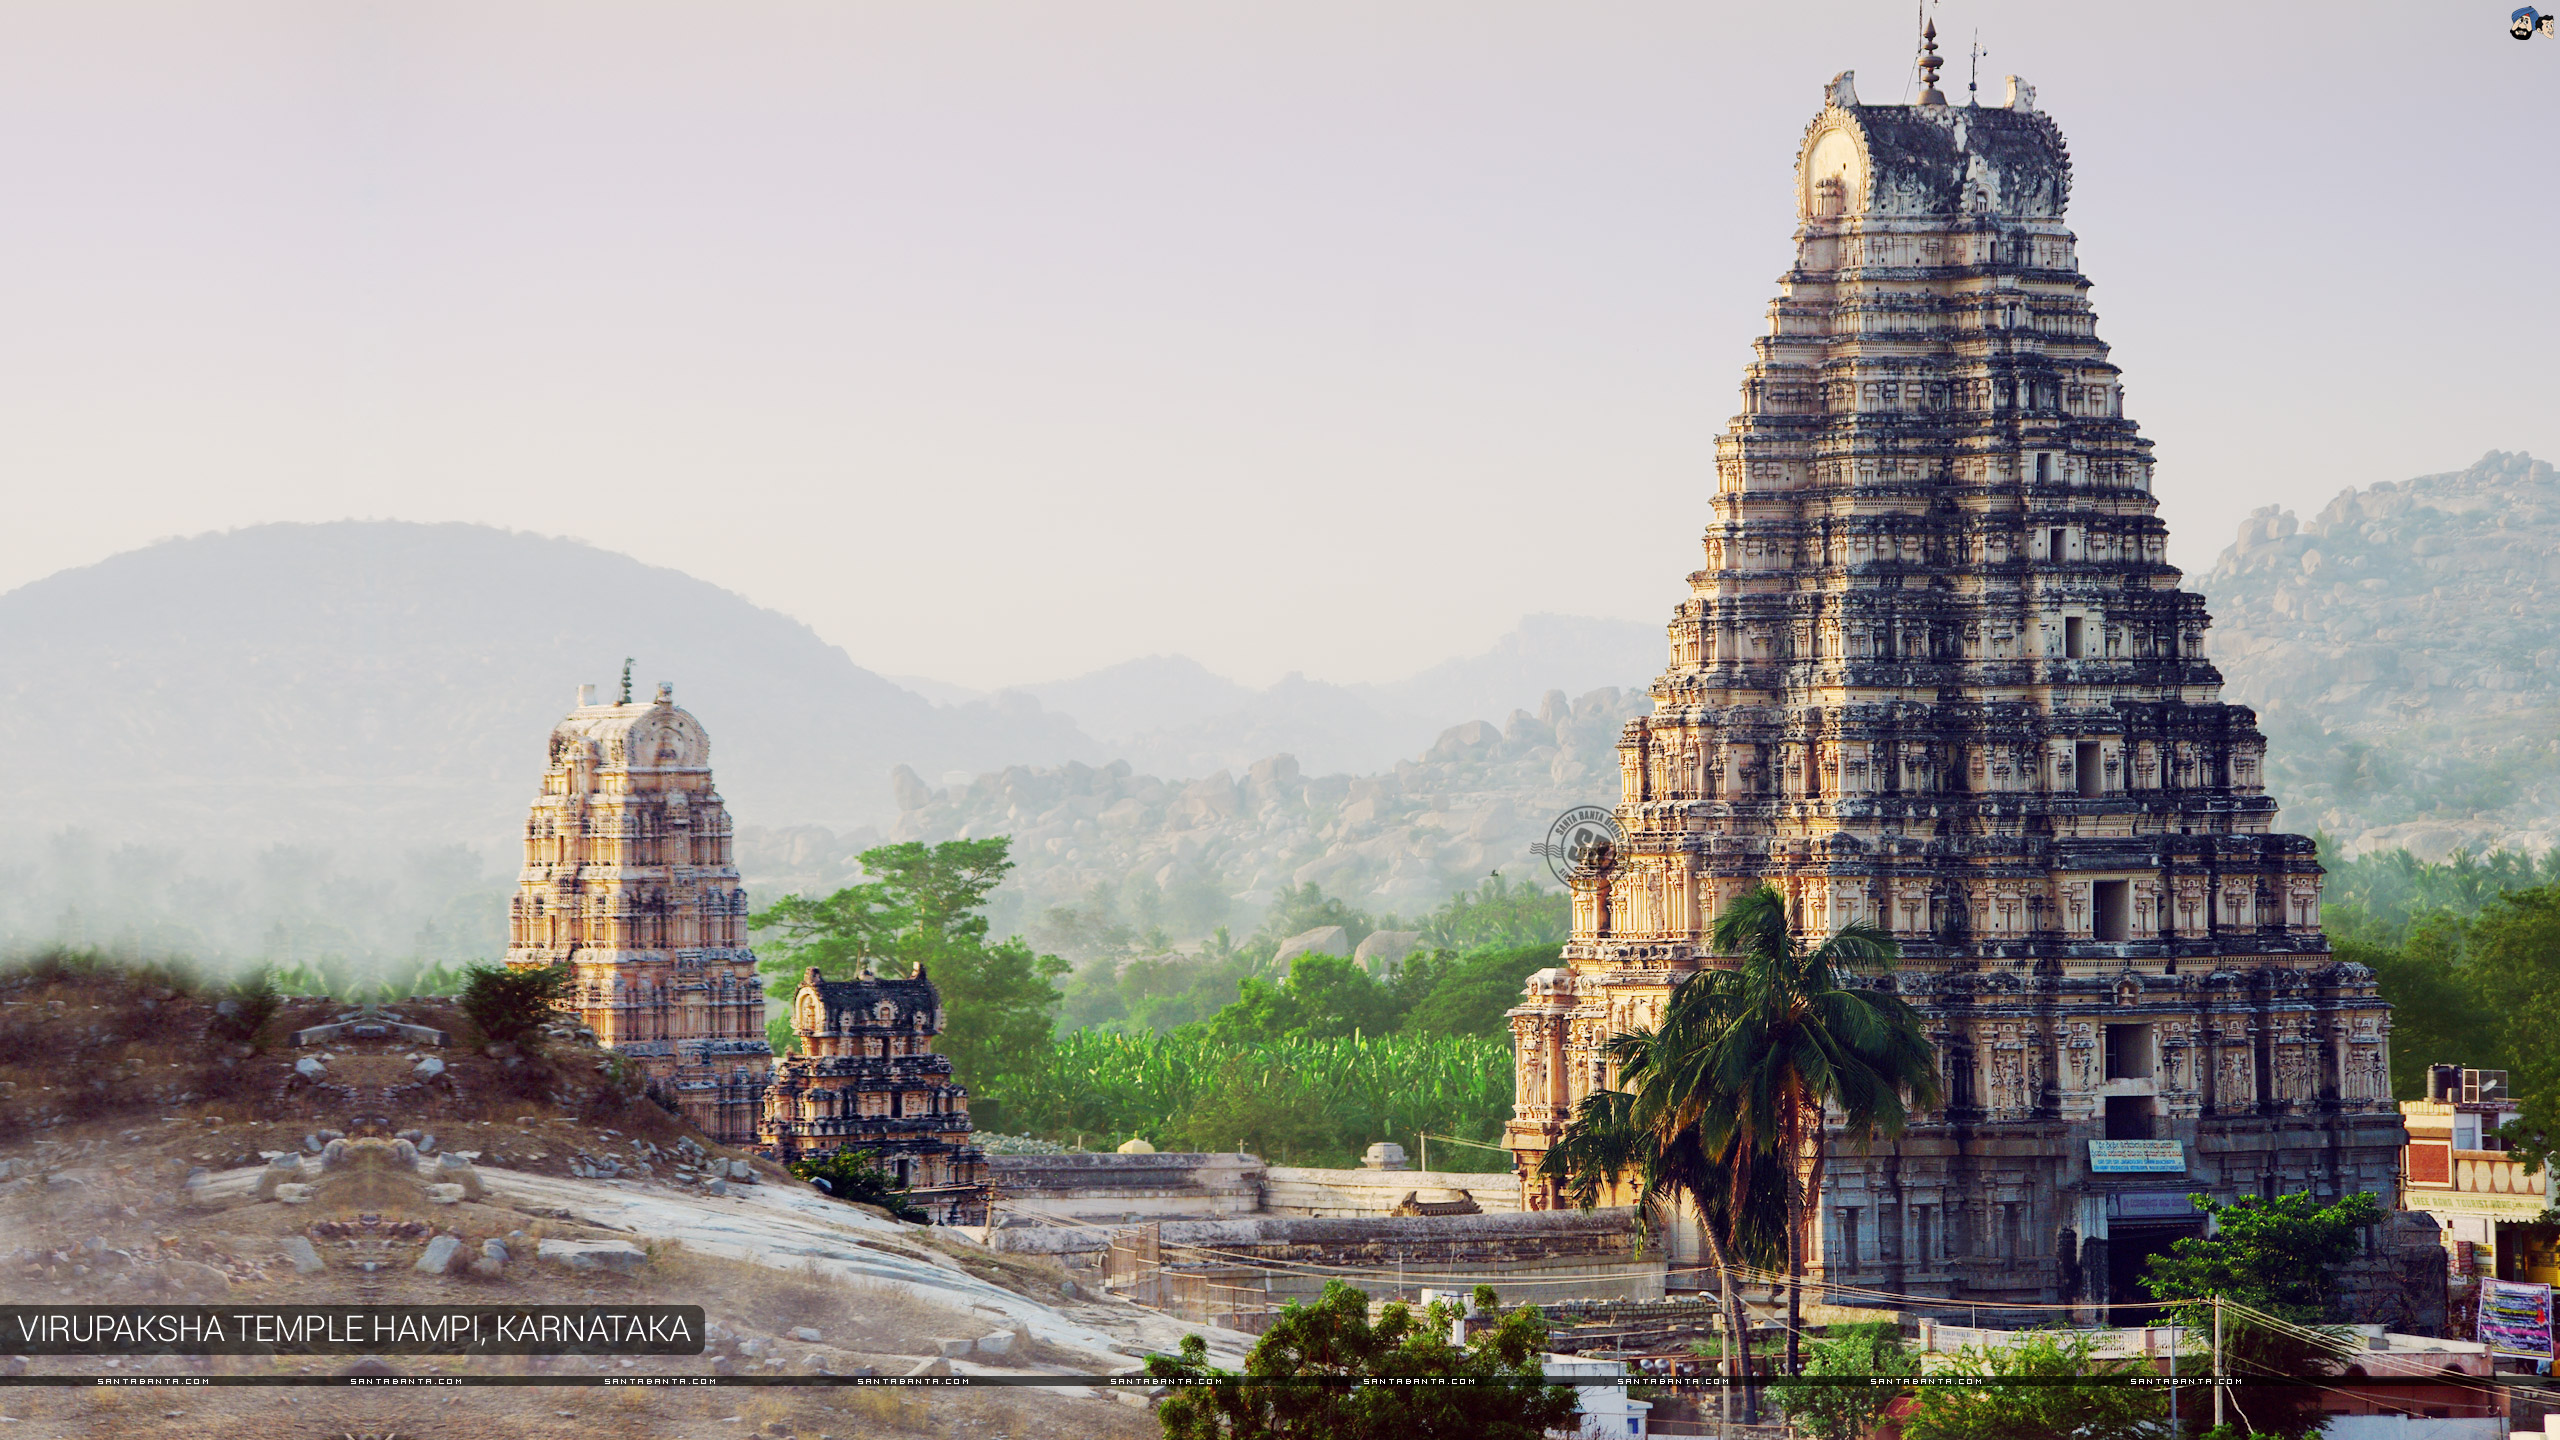 Virupaksha Temple Hampi, Karnataka - Hindu Temple - 2560x1440 Wallpaper -  